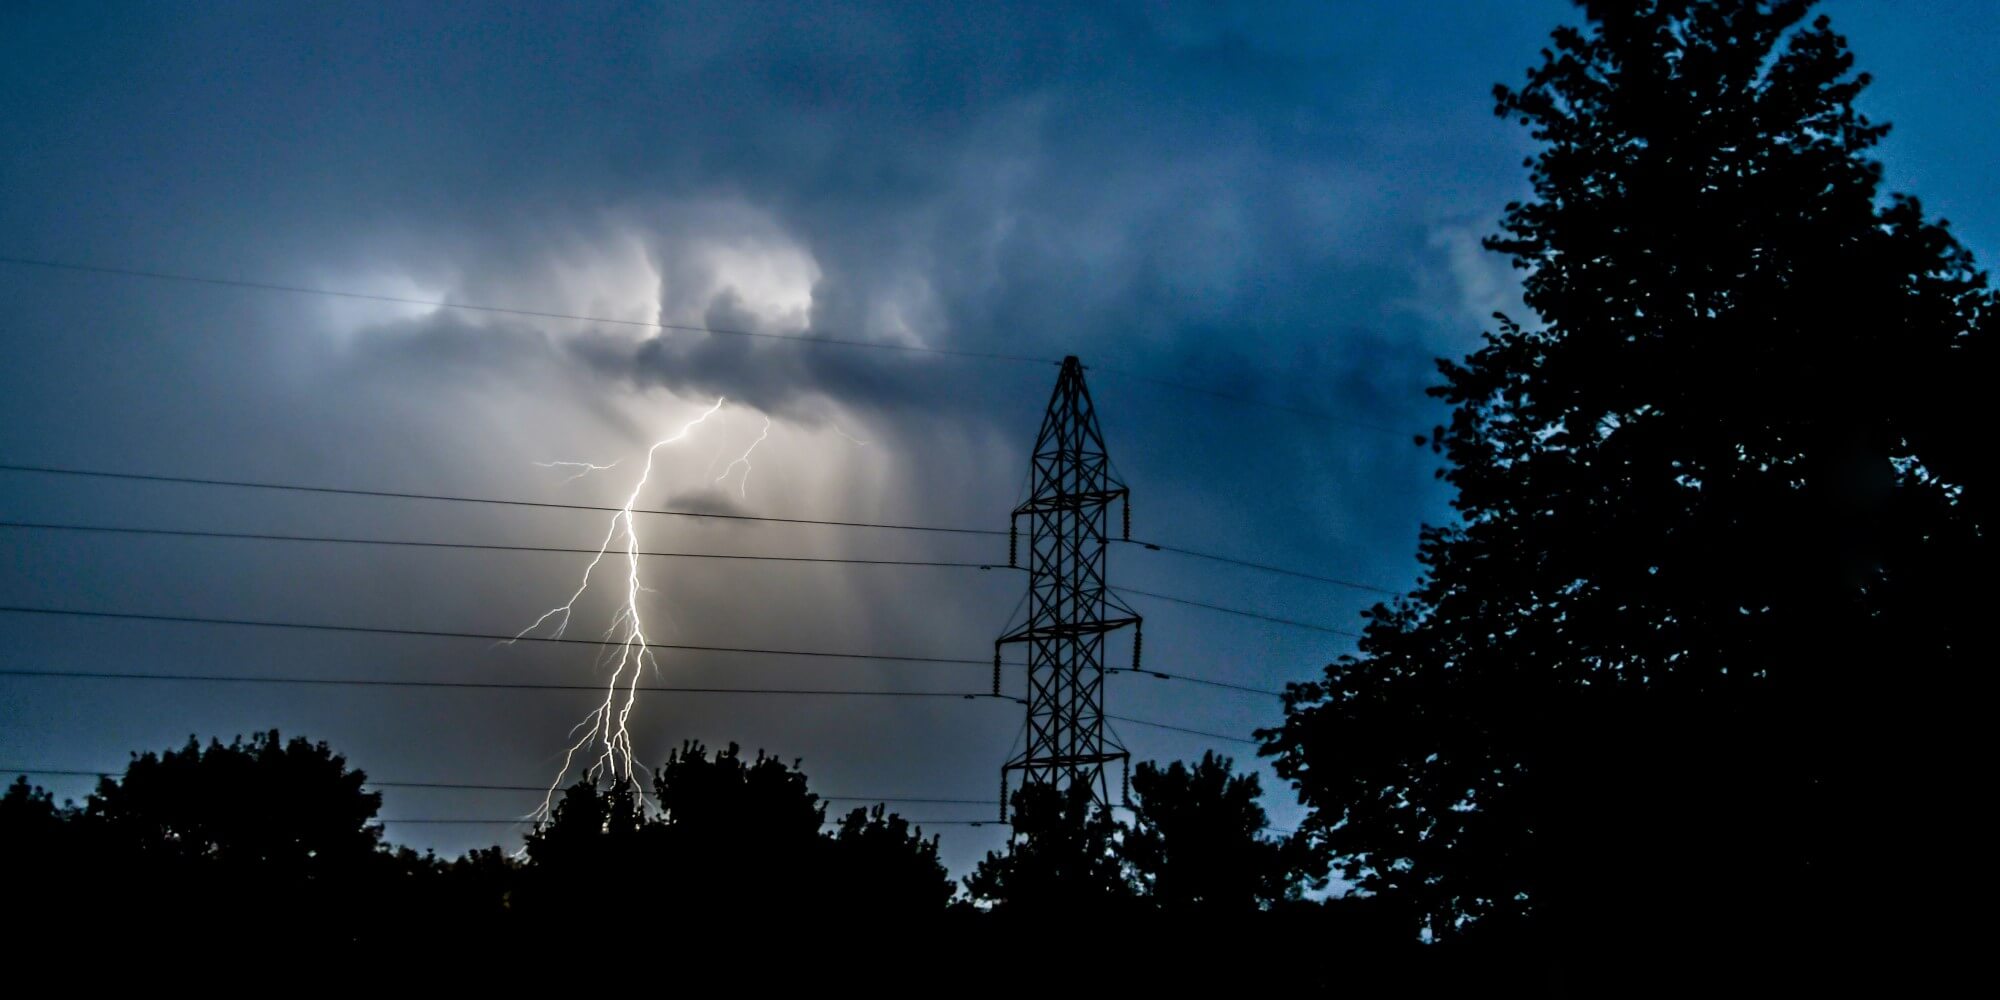 lightning bolt next to power lines